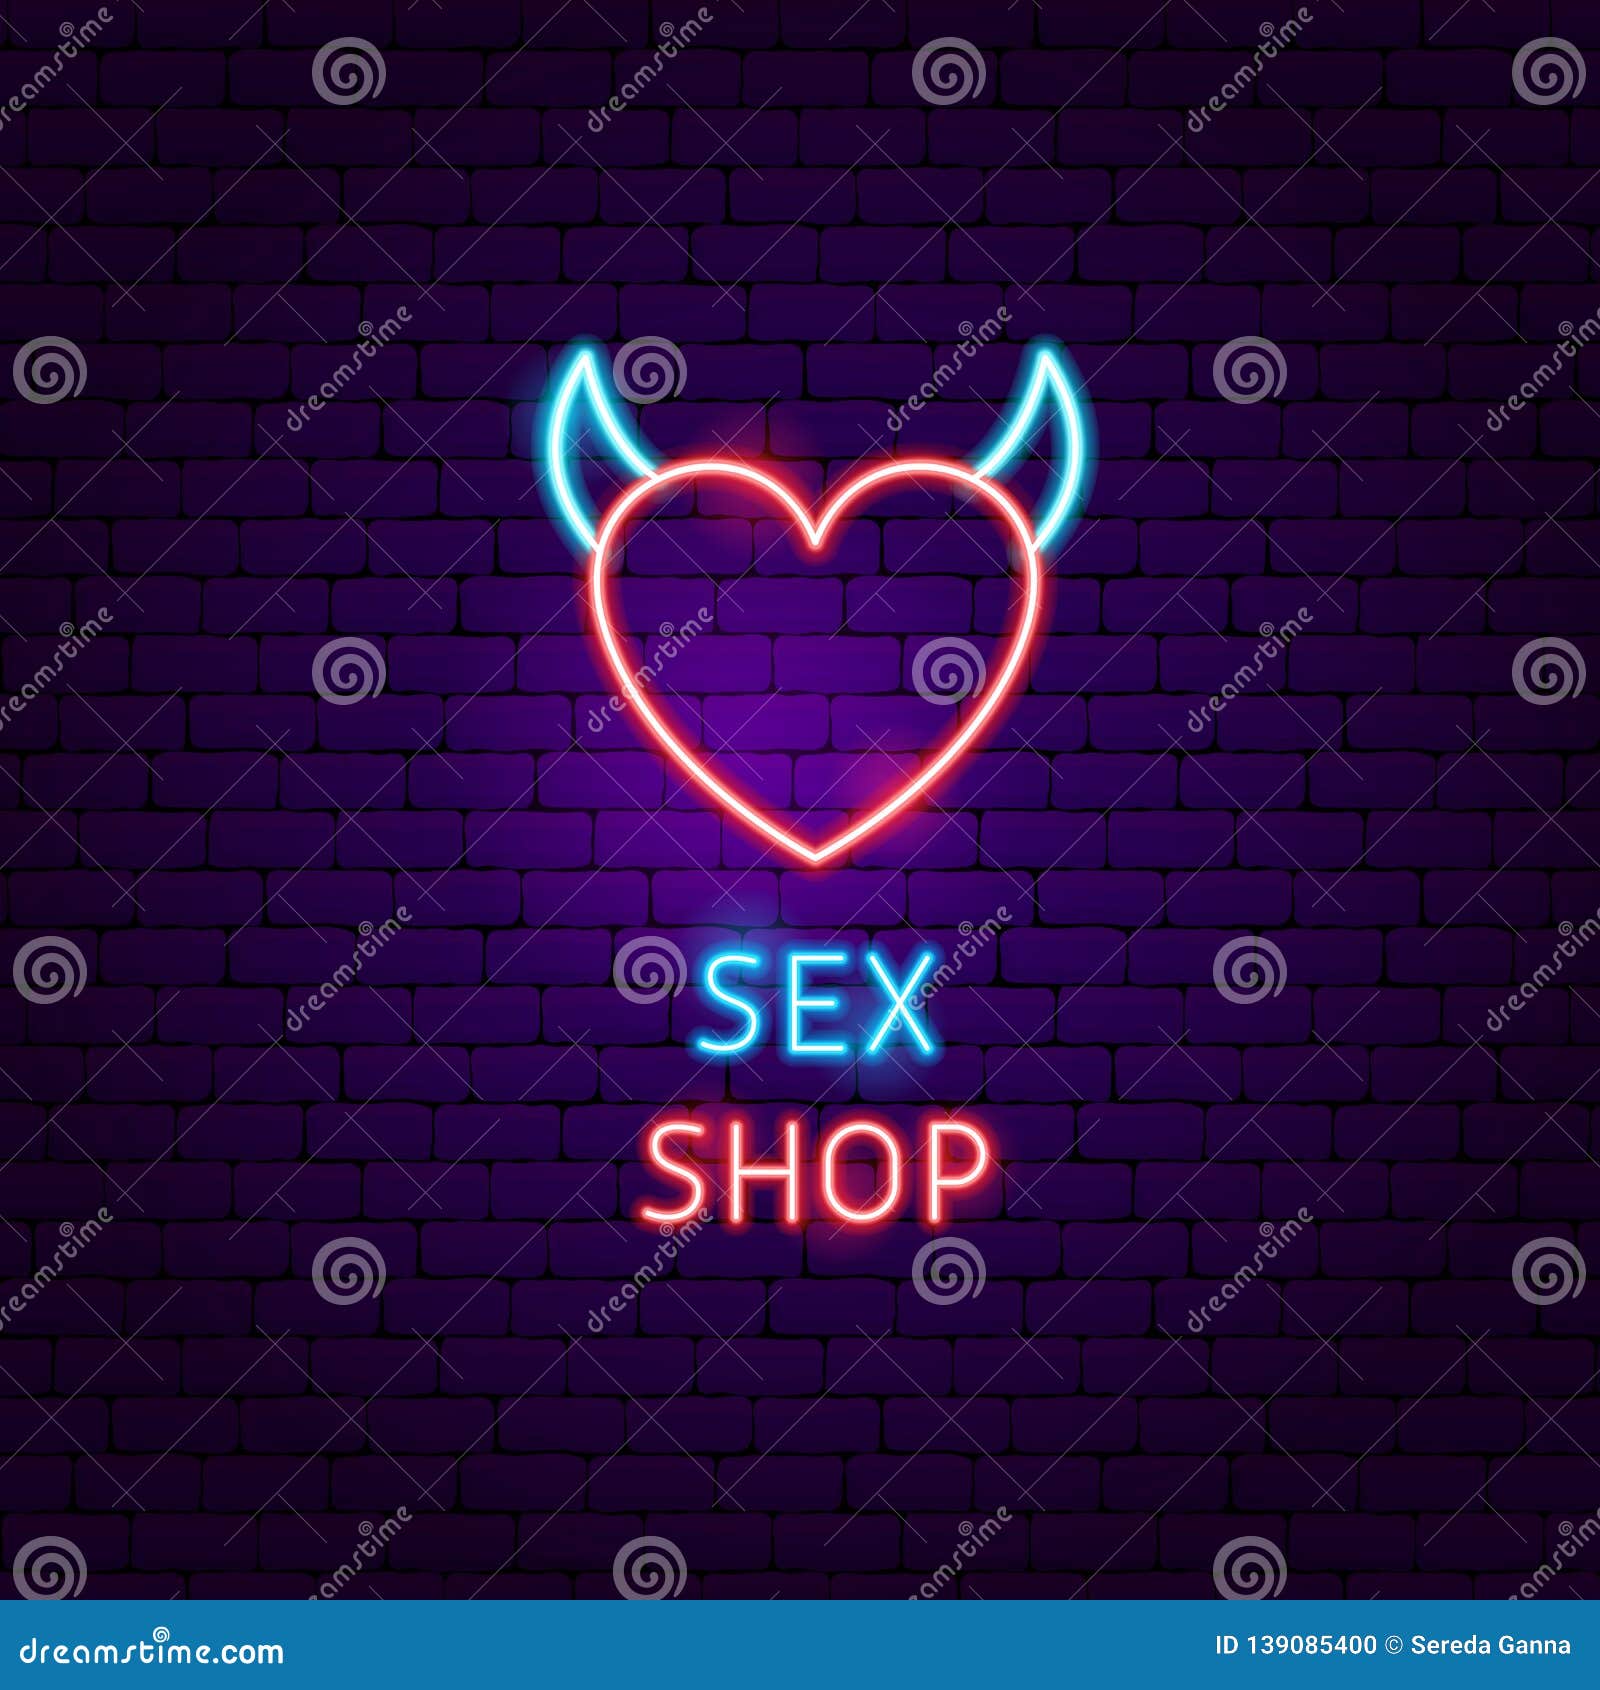 Sex Shop Neon Label Stock Vector Illustration Of Club 139085400 Free